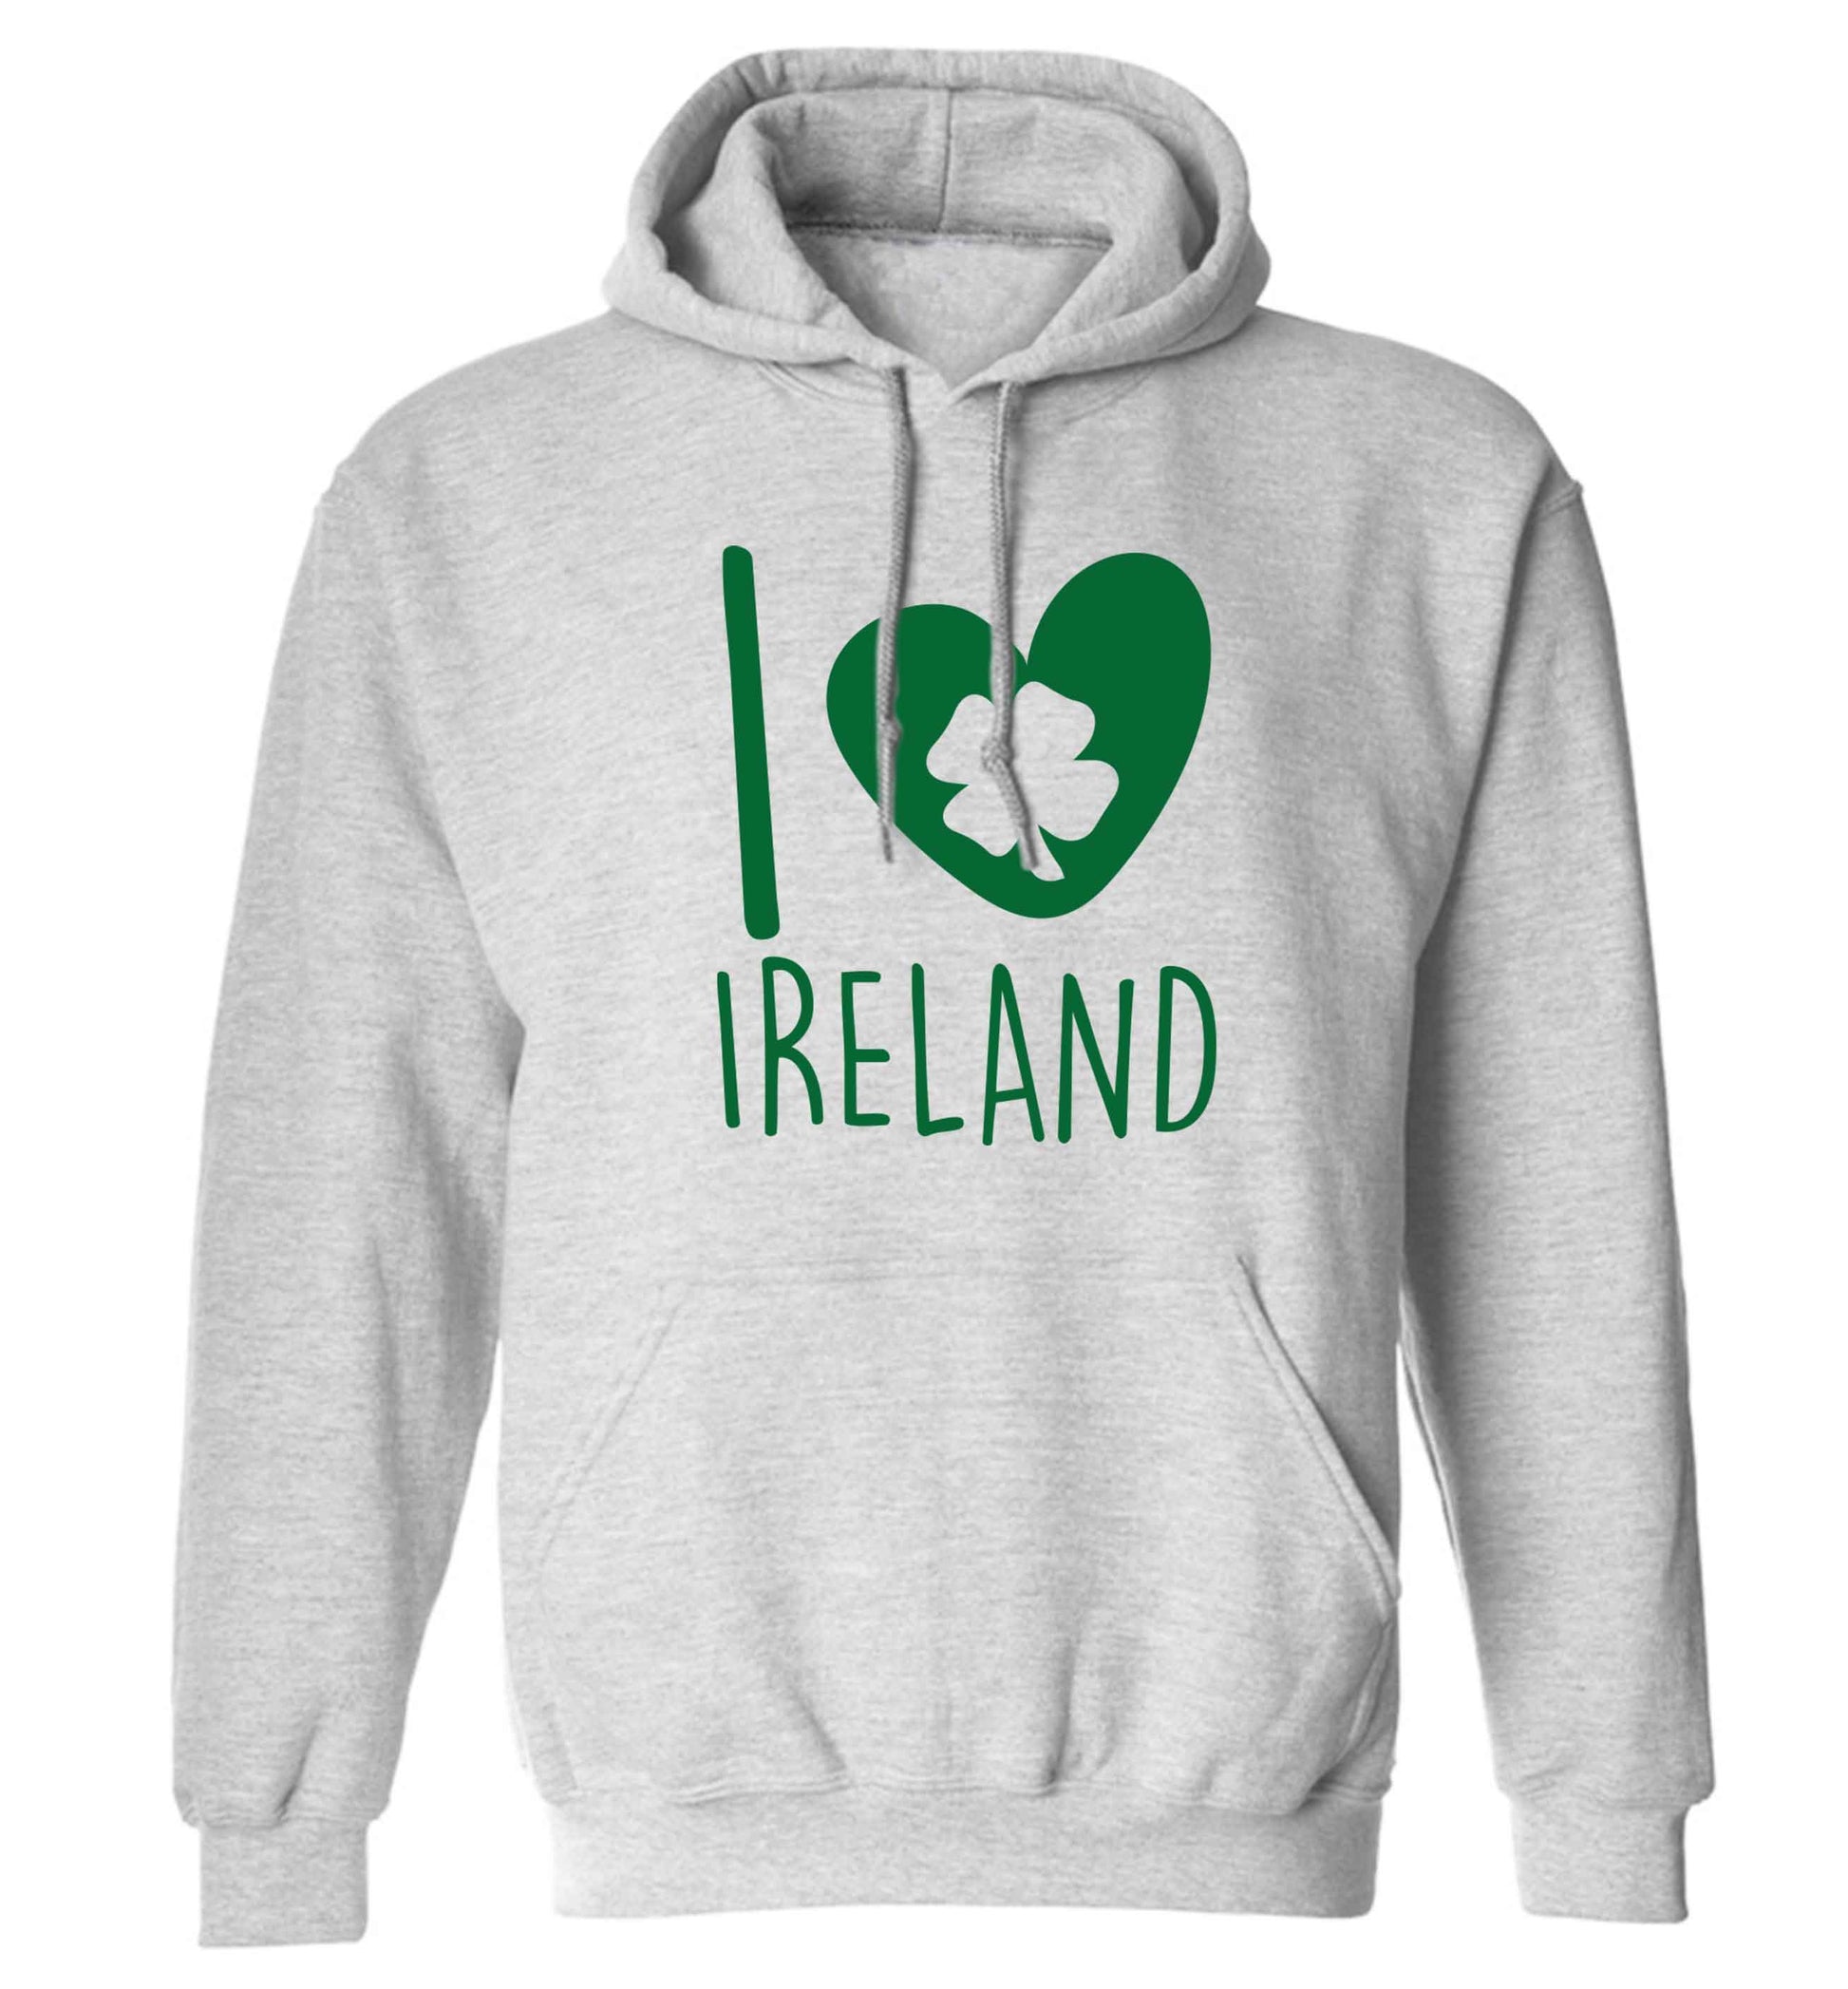 I love Ireland adults unisex grey hoodie 2XL